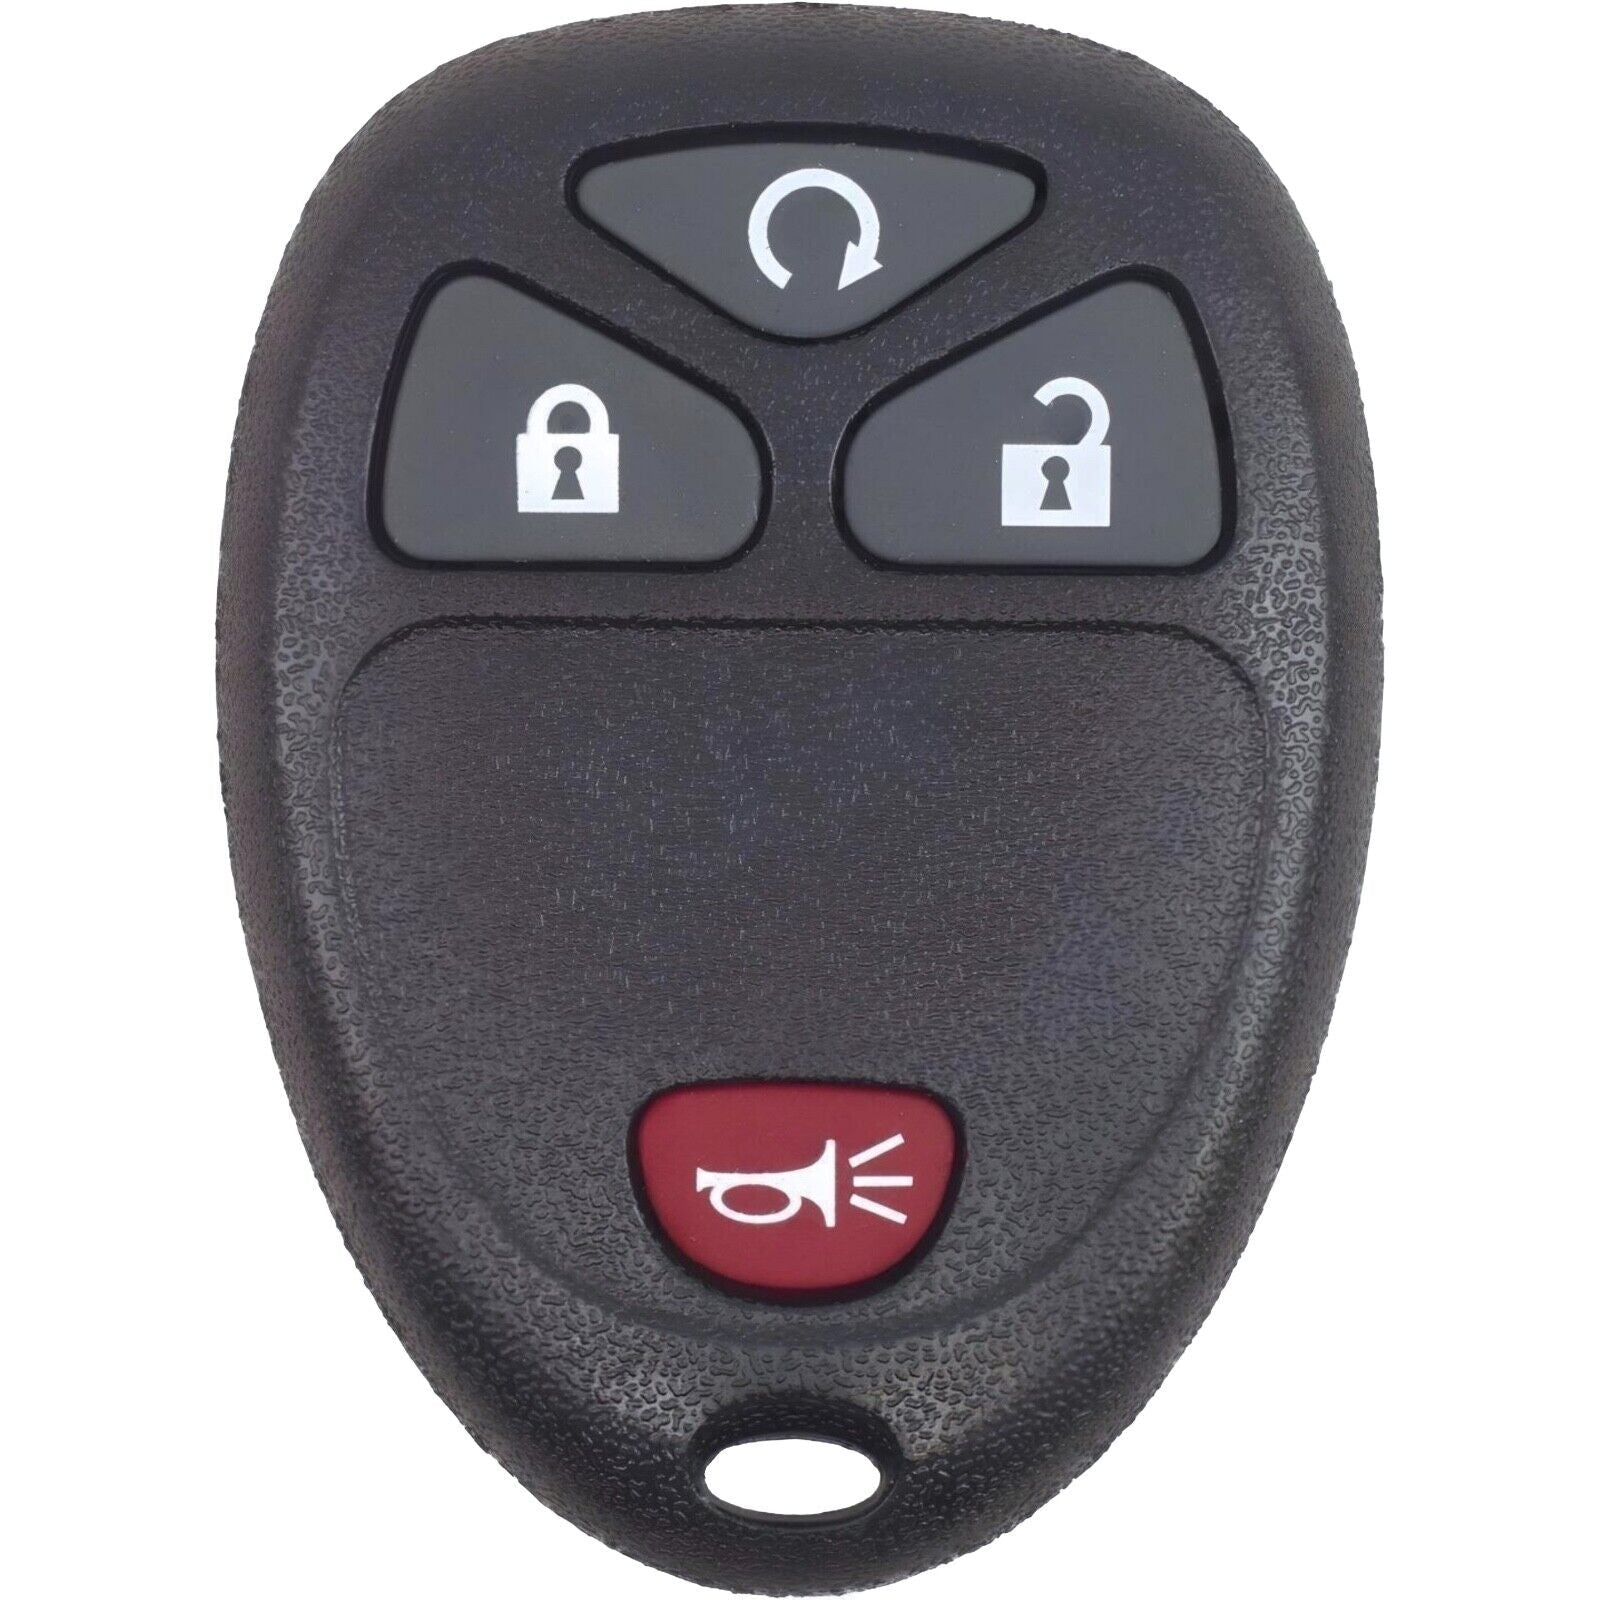 Key Fob Replacement For 2006-2011 Chevrolet HHR FCC ID: KOBGT04A